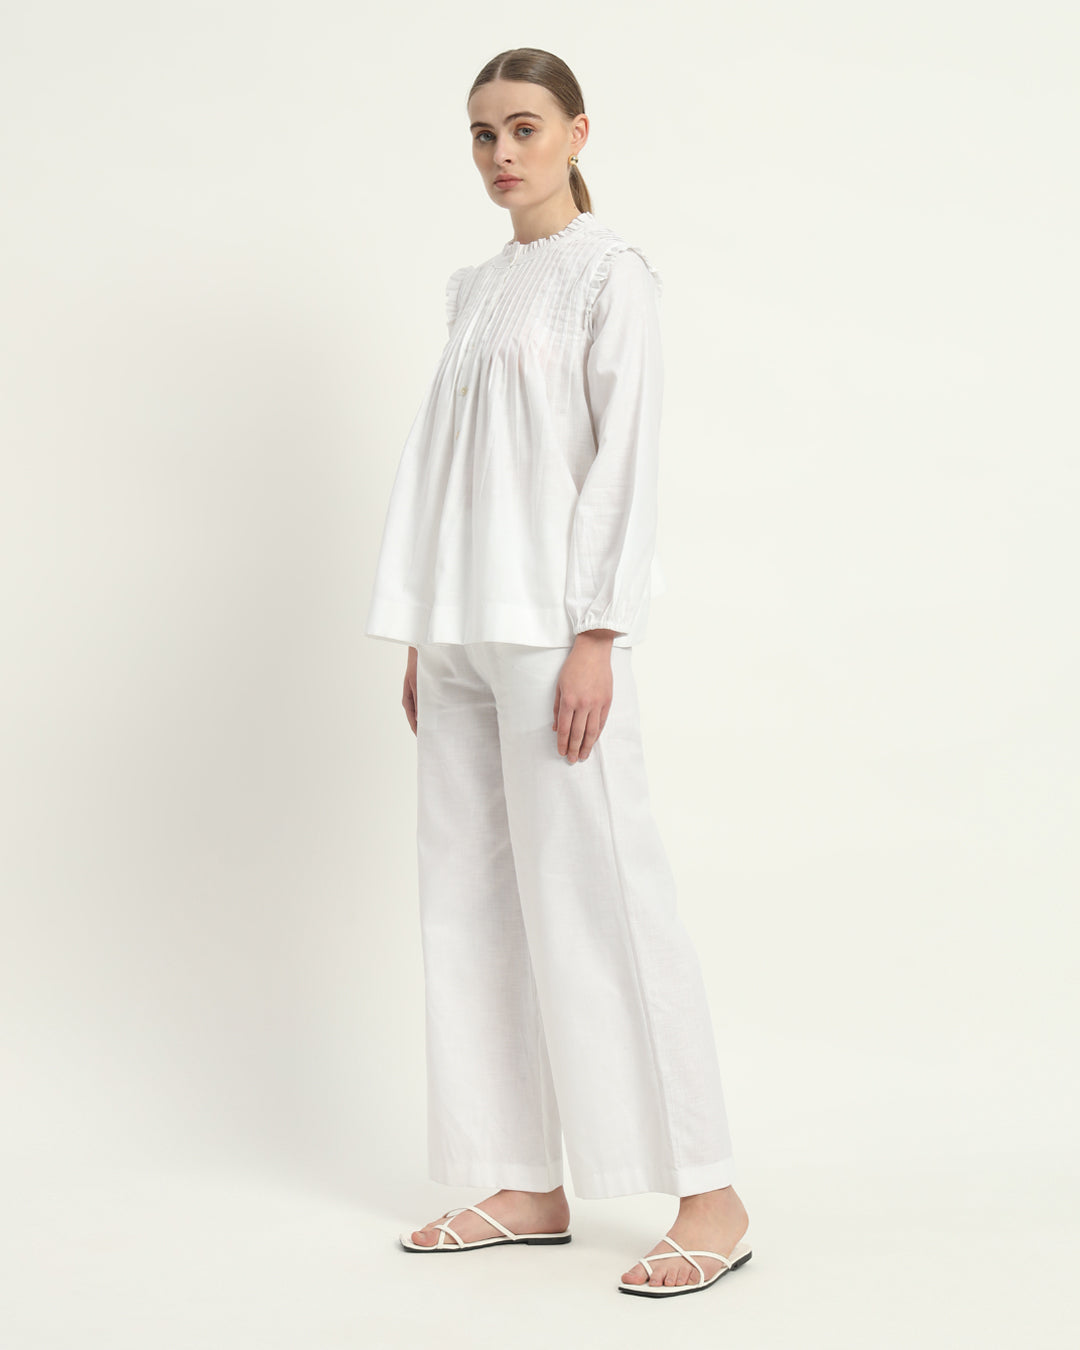 Pants Matching Set- White Sleek Peplum Duo Linen